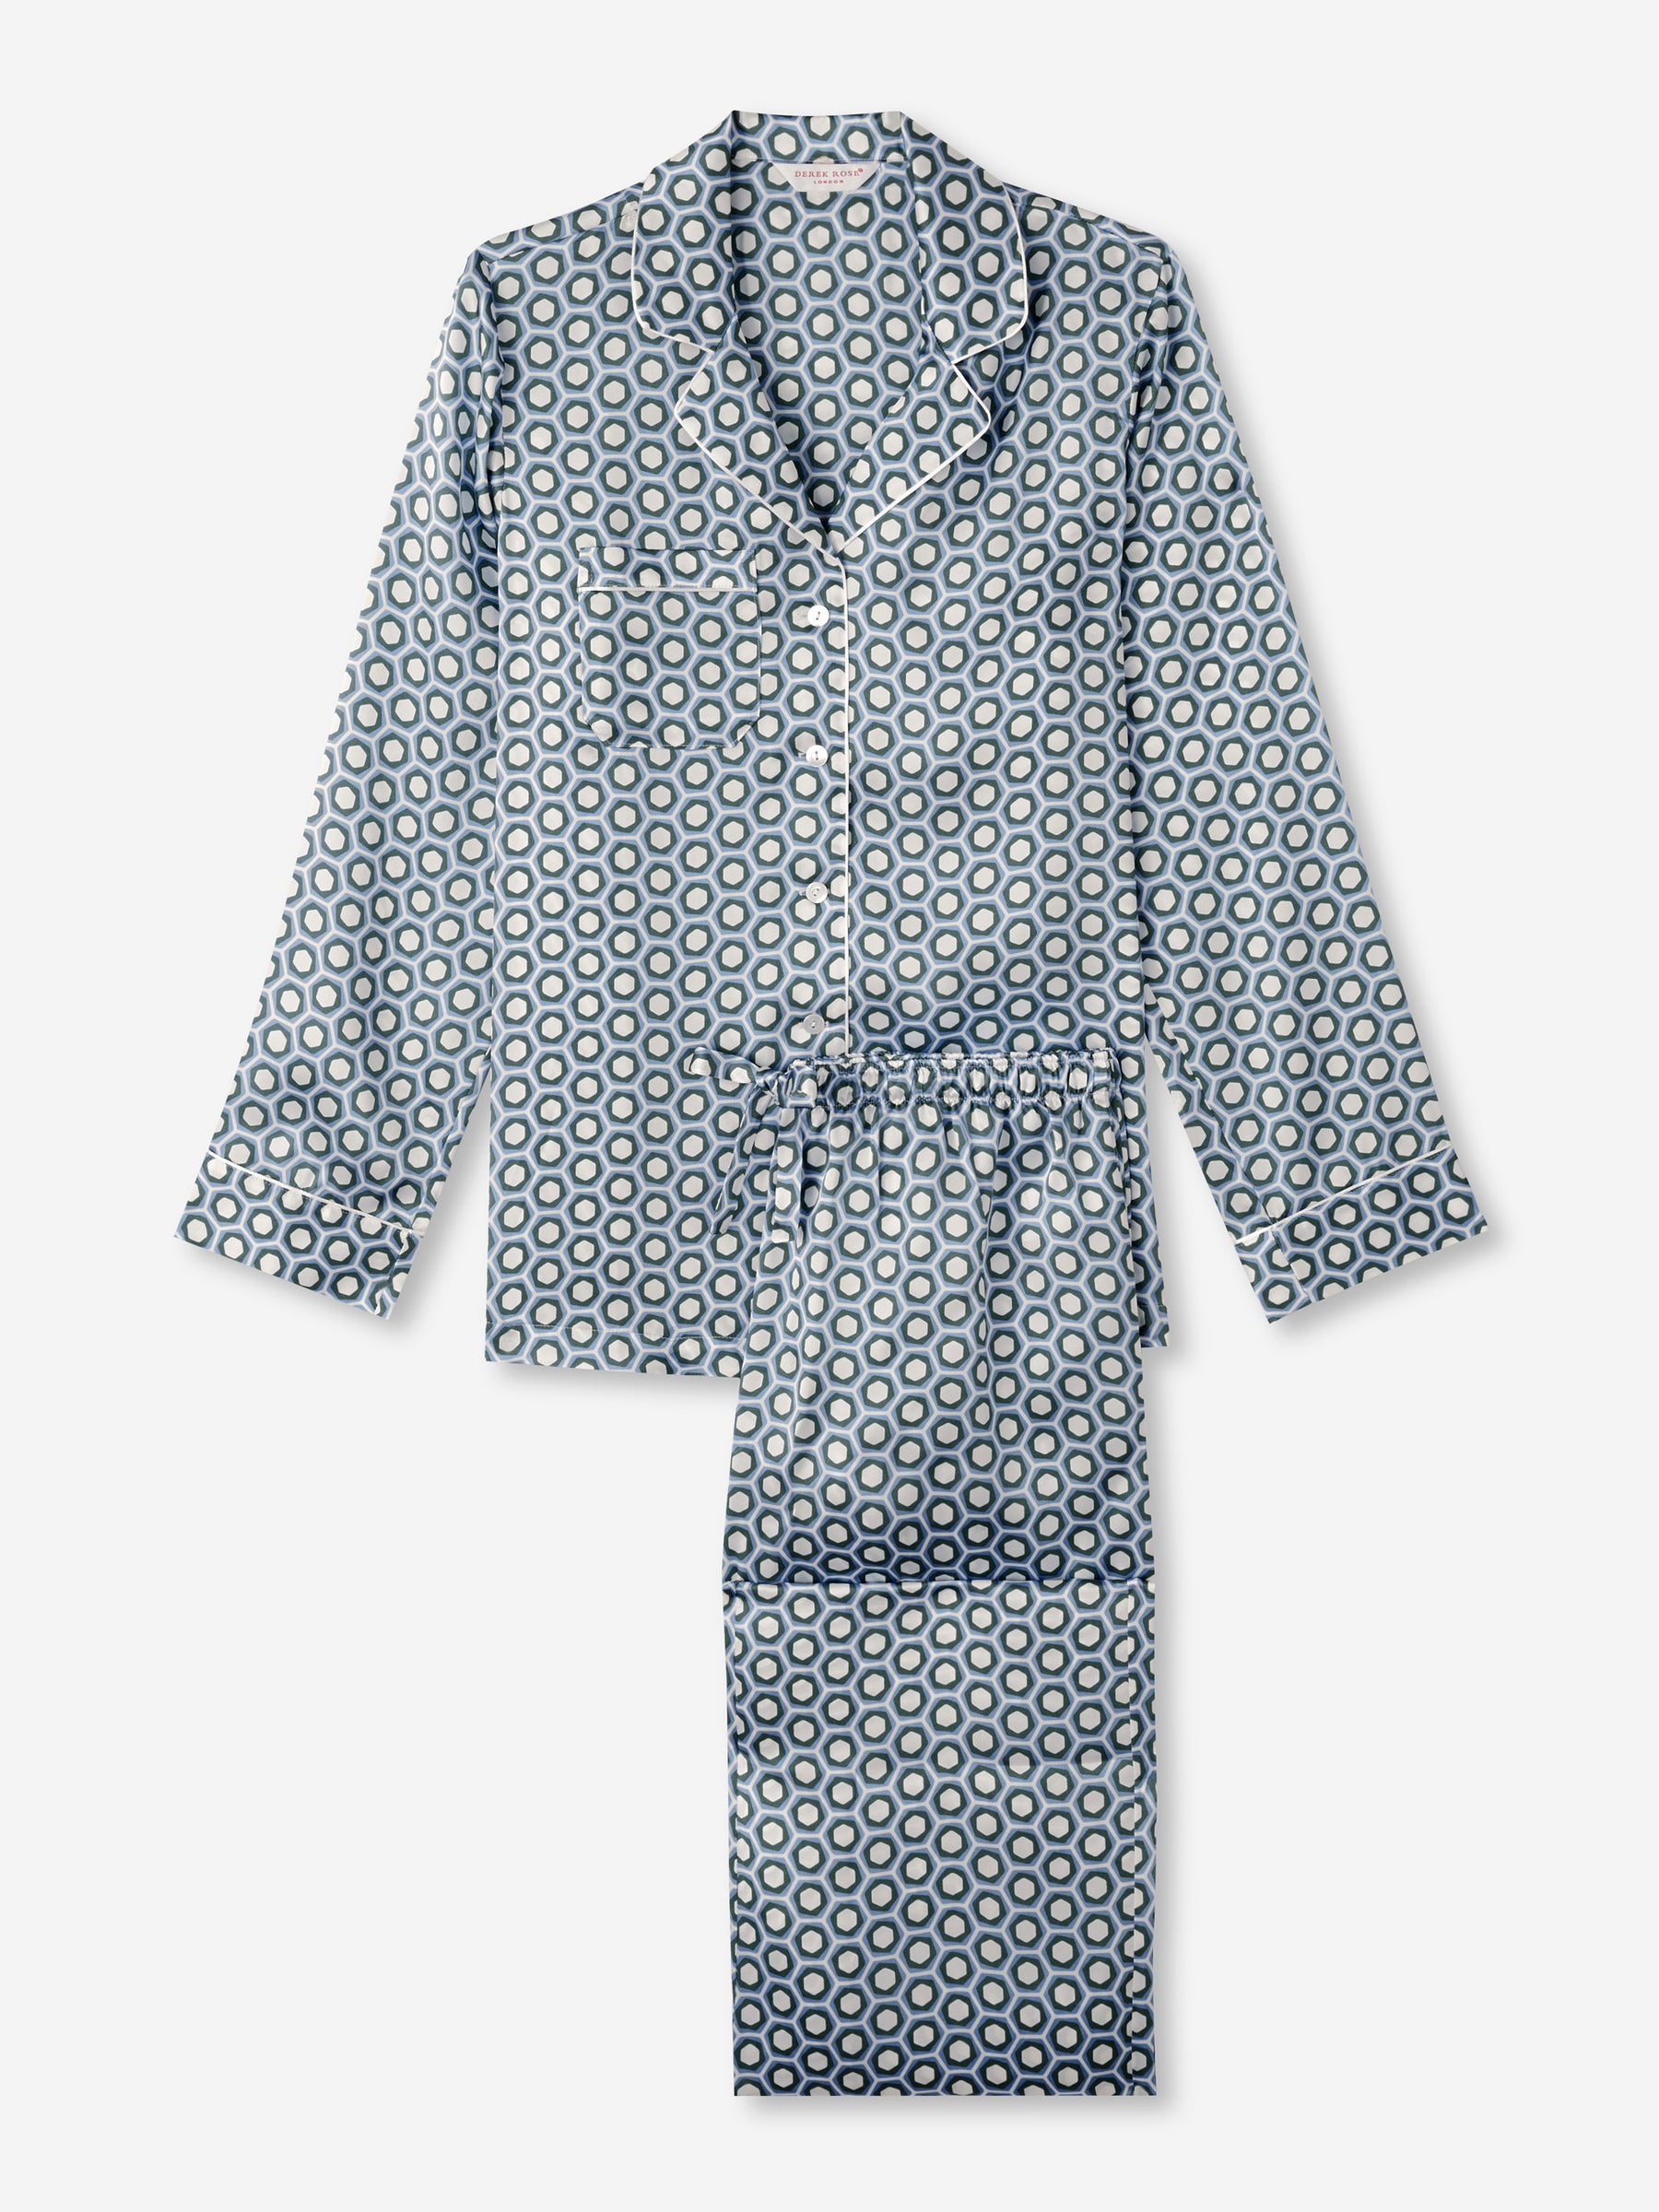 Women's Pyjamas Brindisi 75 Silk Satin Multi